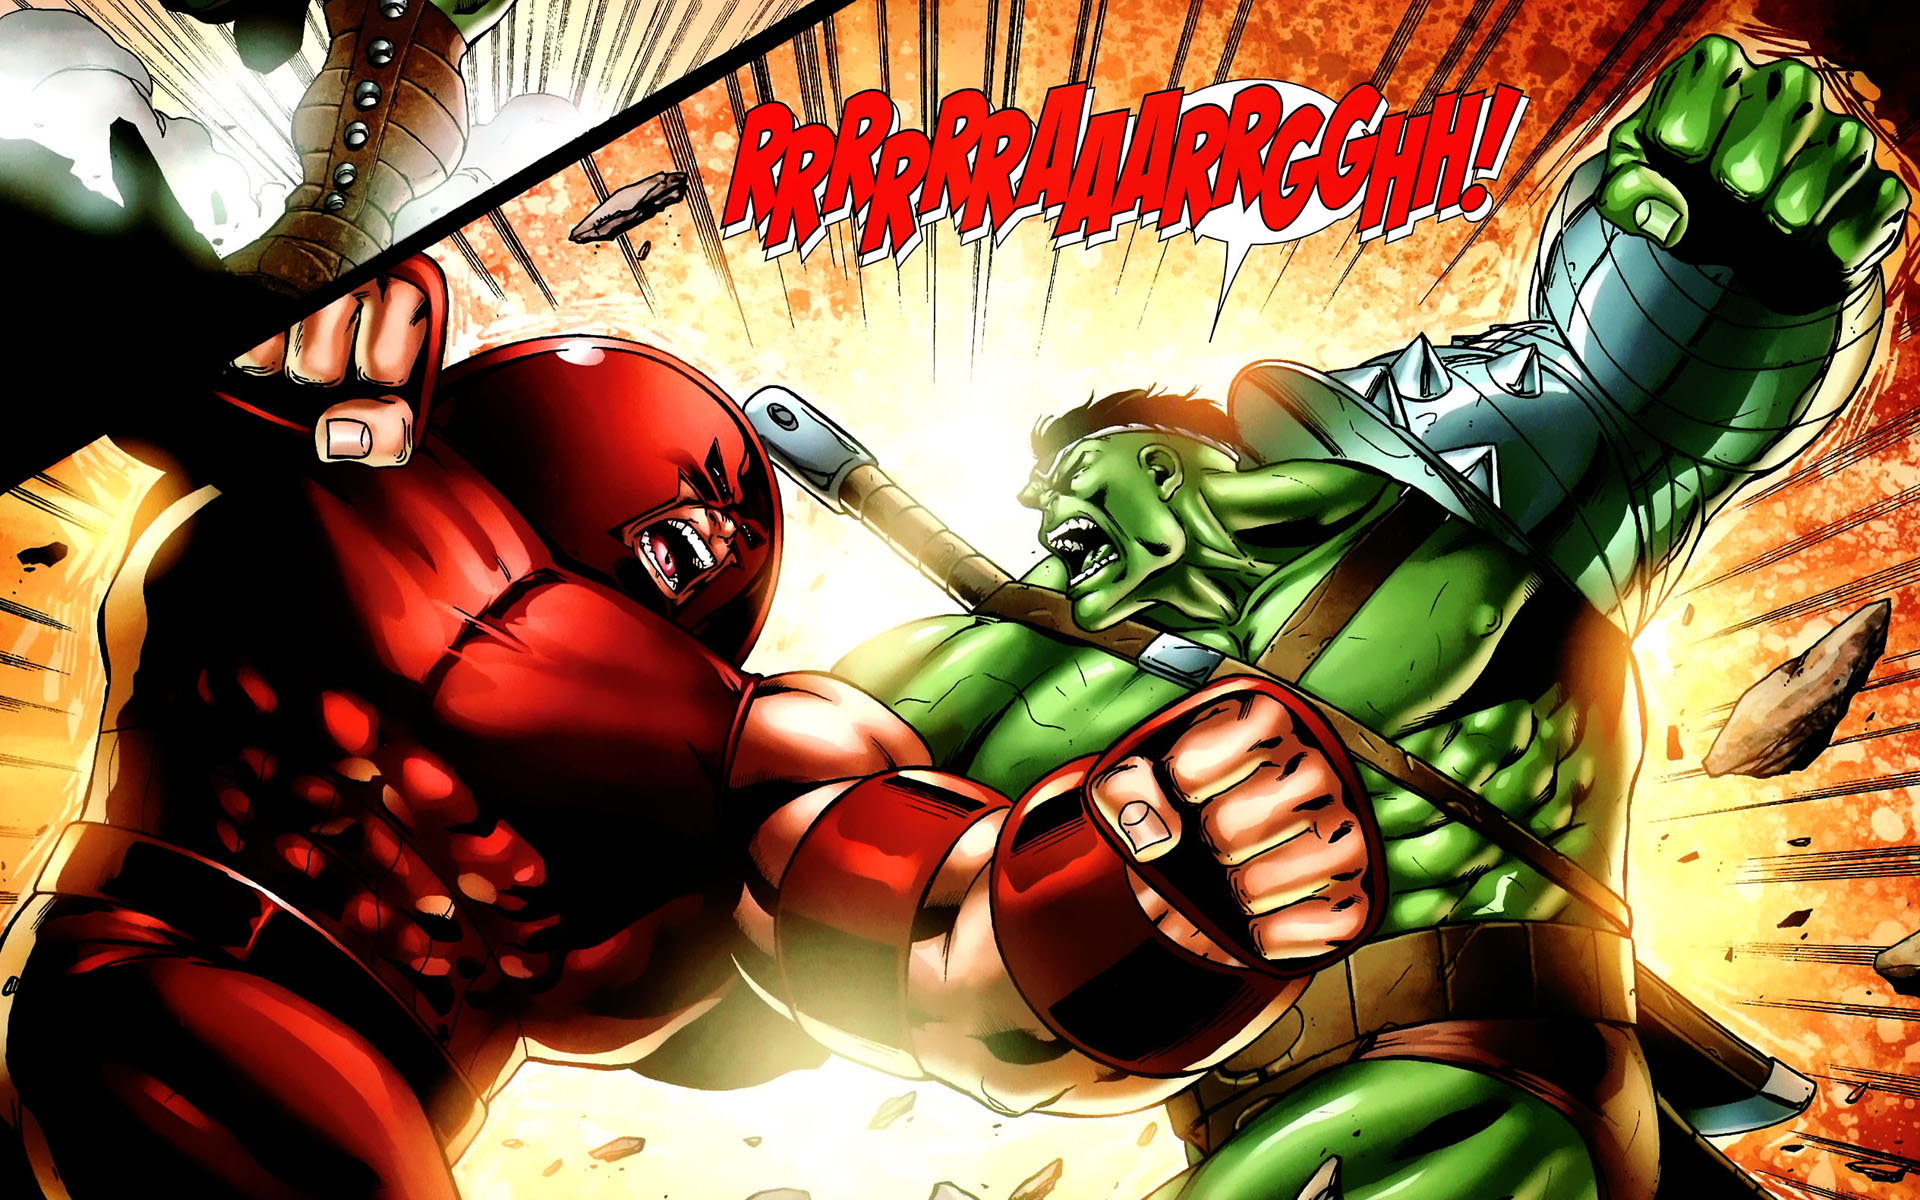 Comics World War Hulk HD Wallpaper | Background Image